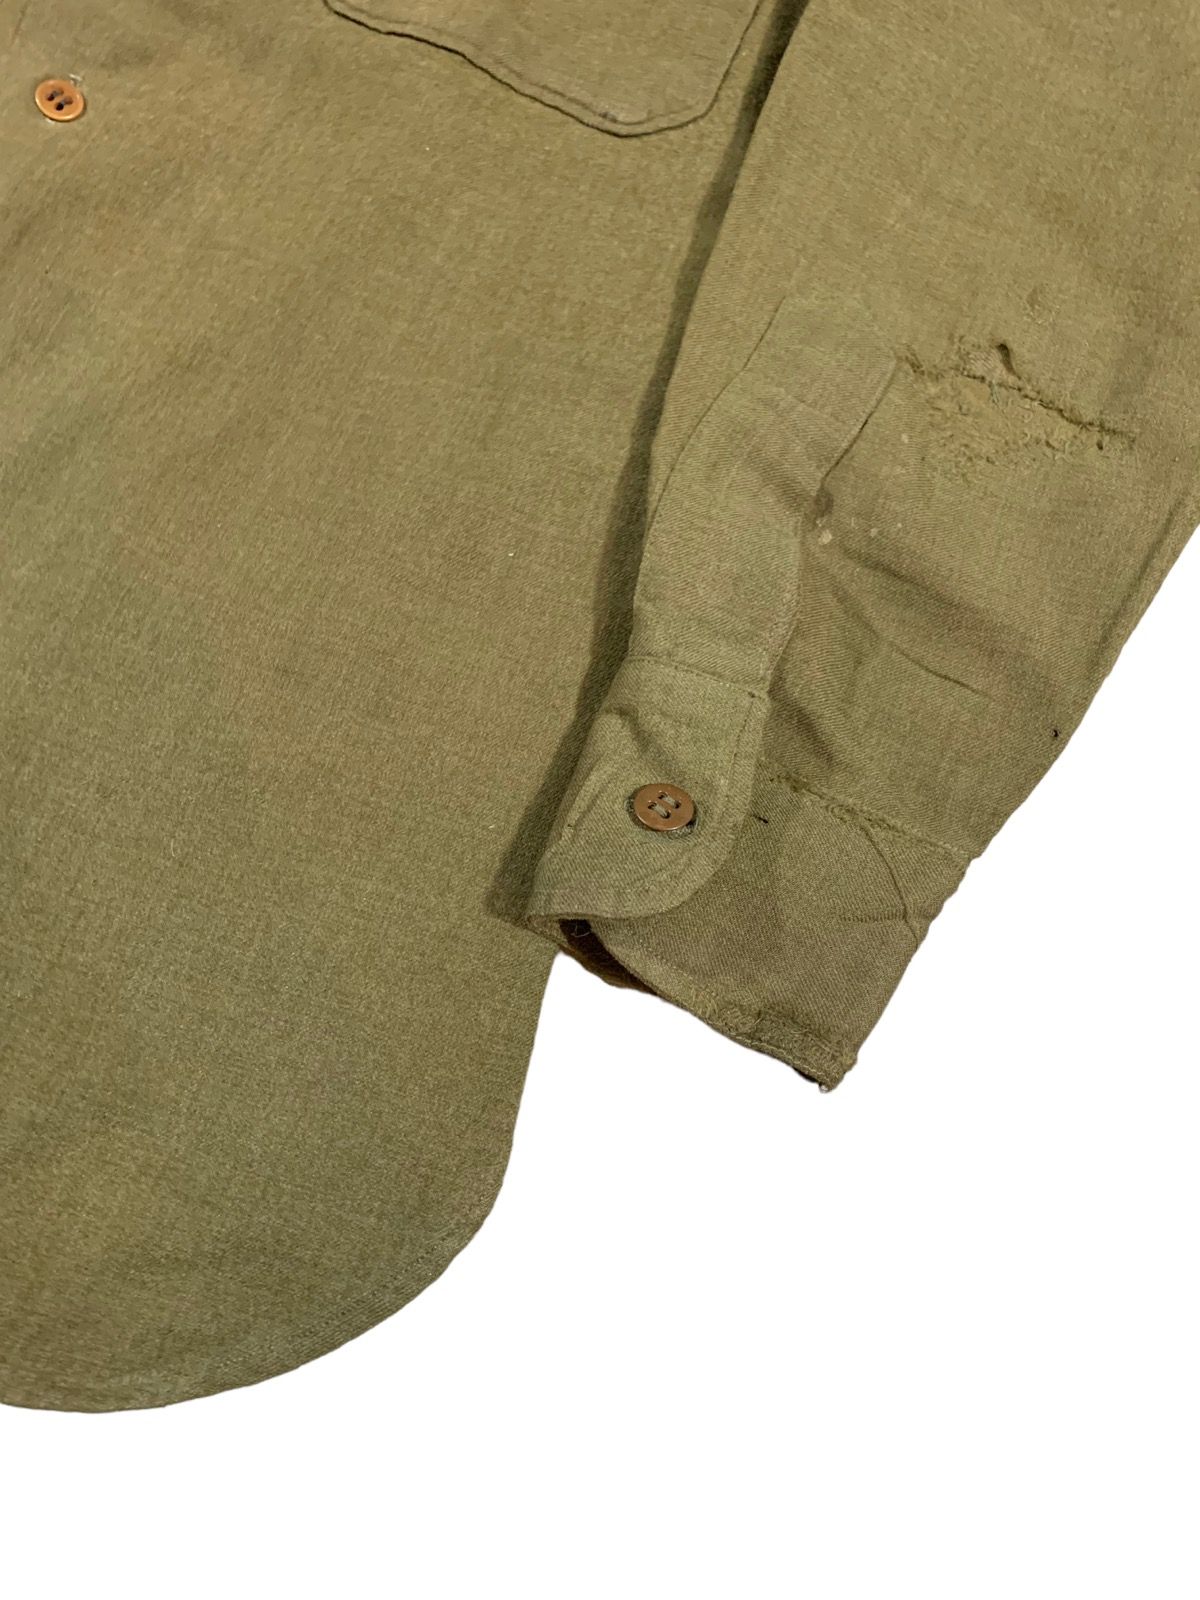 Vintage Vintage WW2 US Military Wool Shirt Size US M / EU 48-50 / 2 - 6 Thumbnail